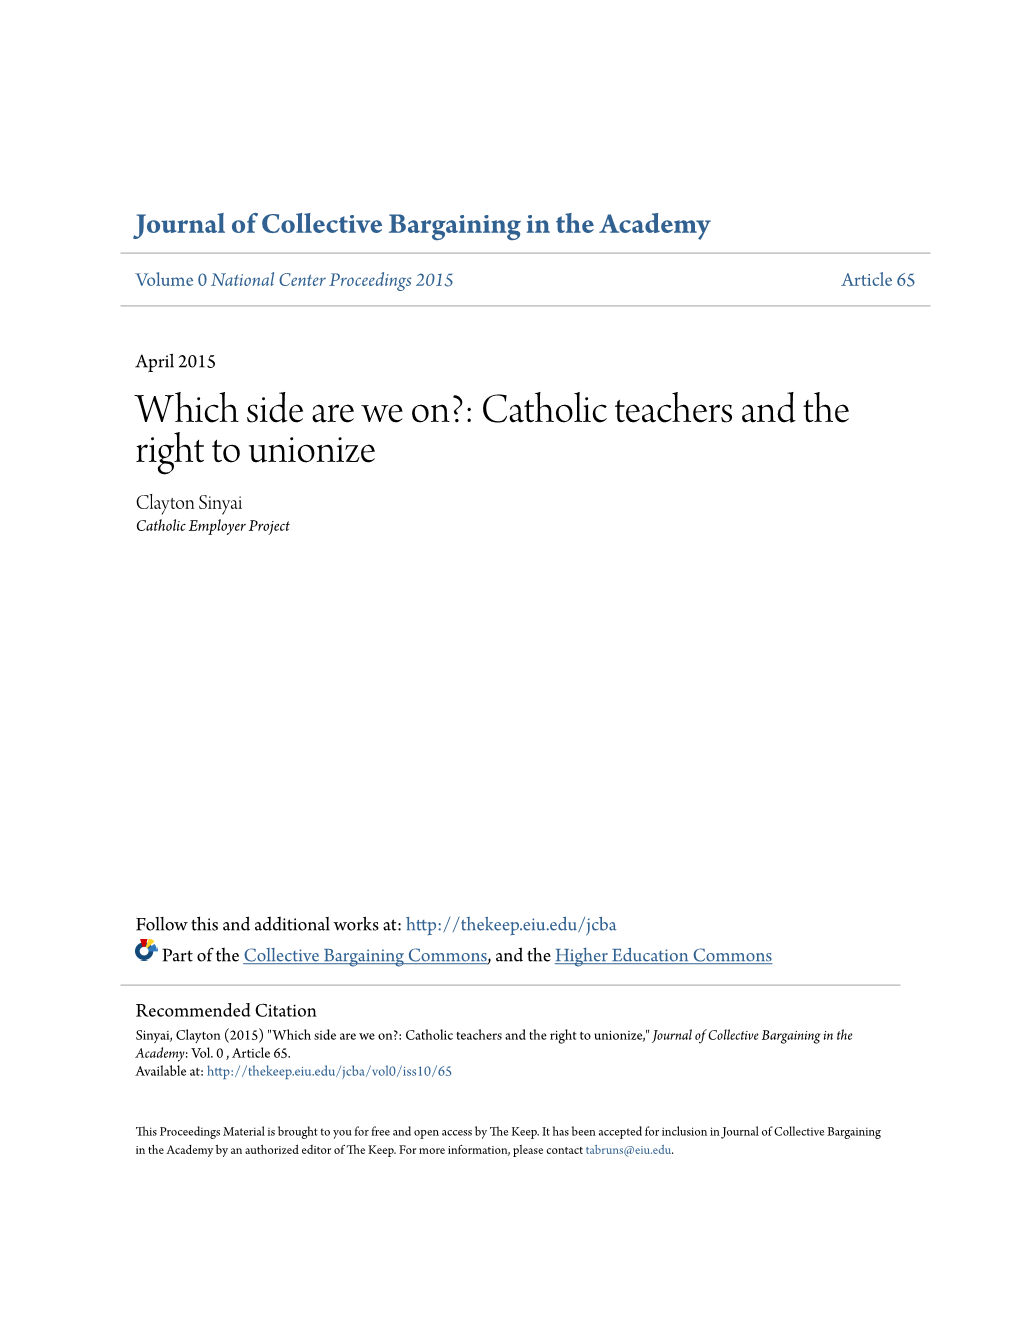 Which Side Are We On?: Catholic Teachers and the Right to Unionize Clayton Sinyai Catholic Employer Project